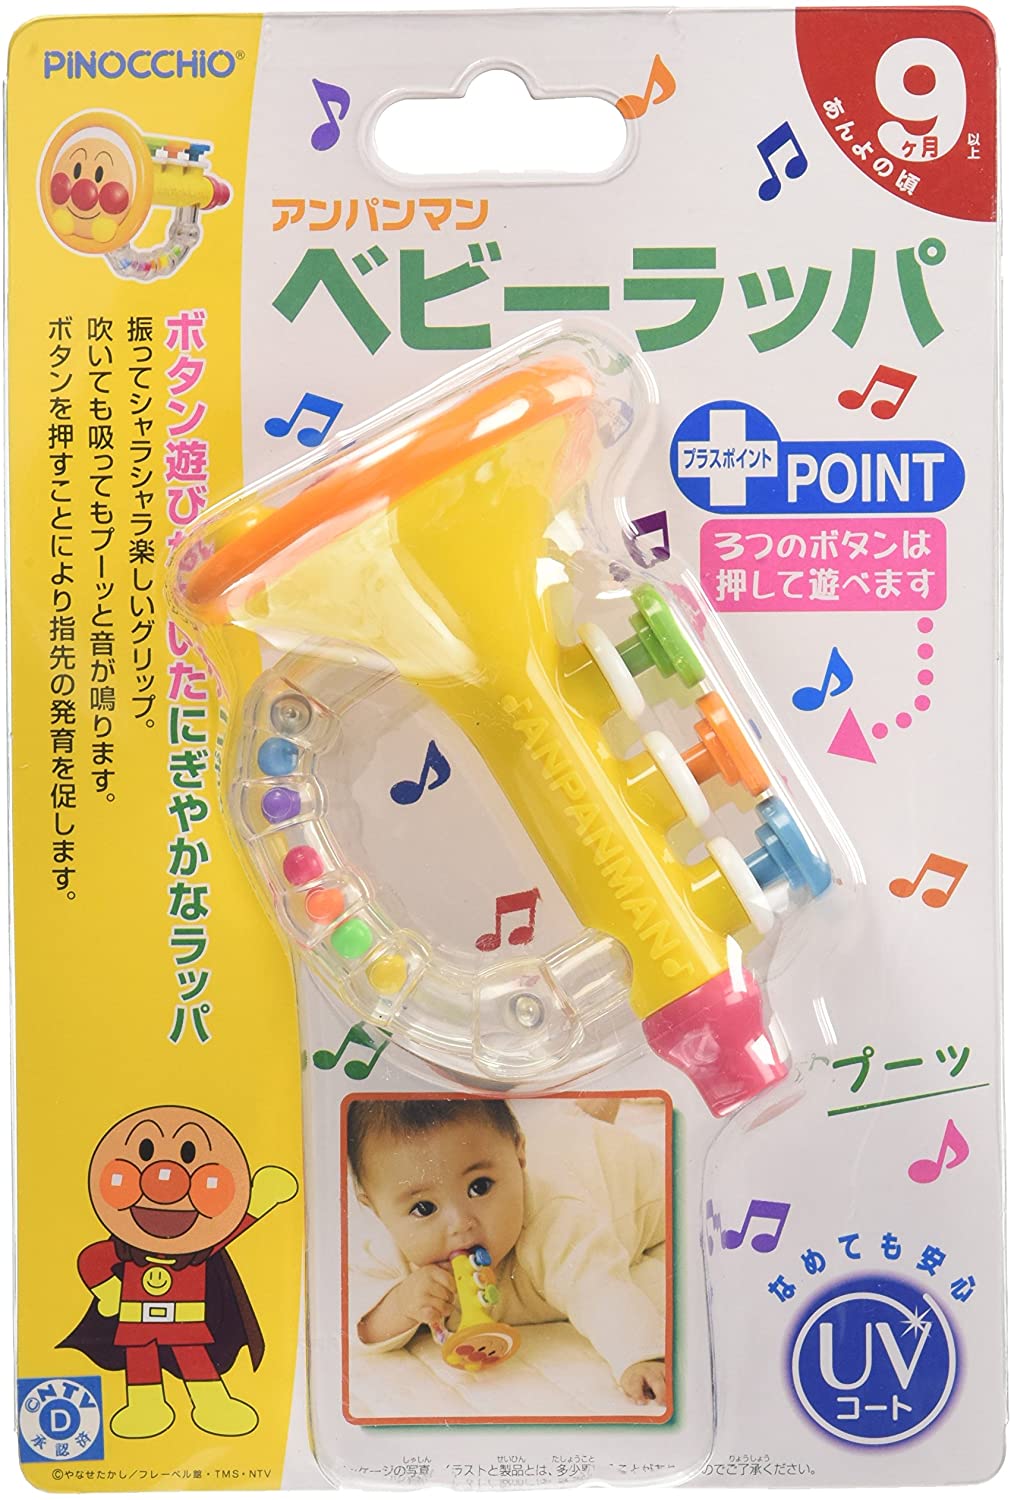 Anpanman Baby Toy Horn 面包超人玩具小喇叭手摇铃 9 month+